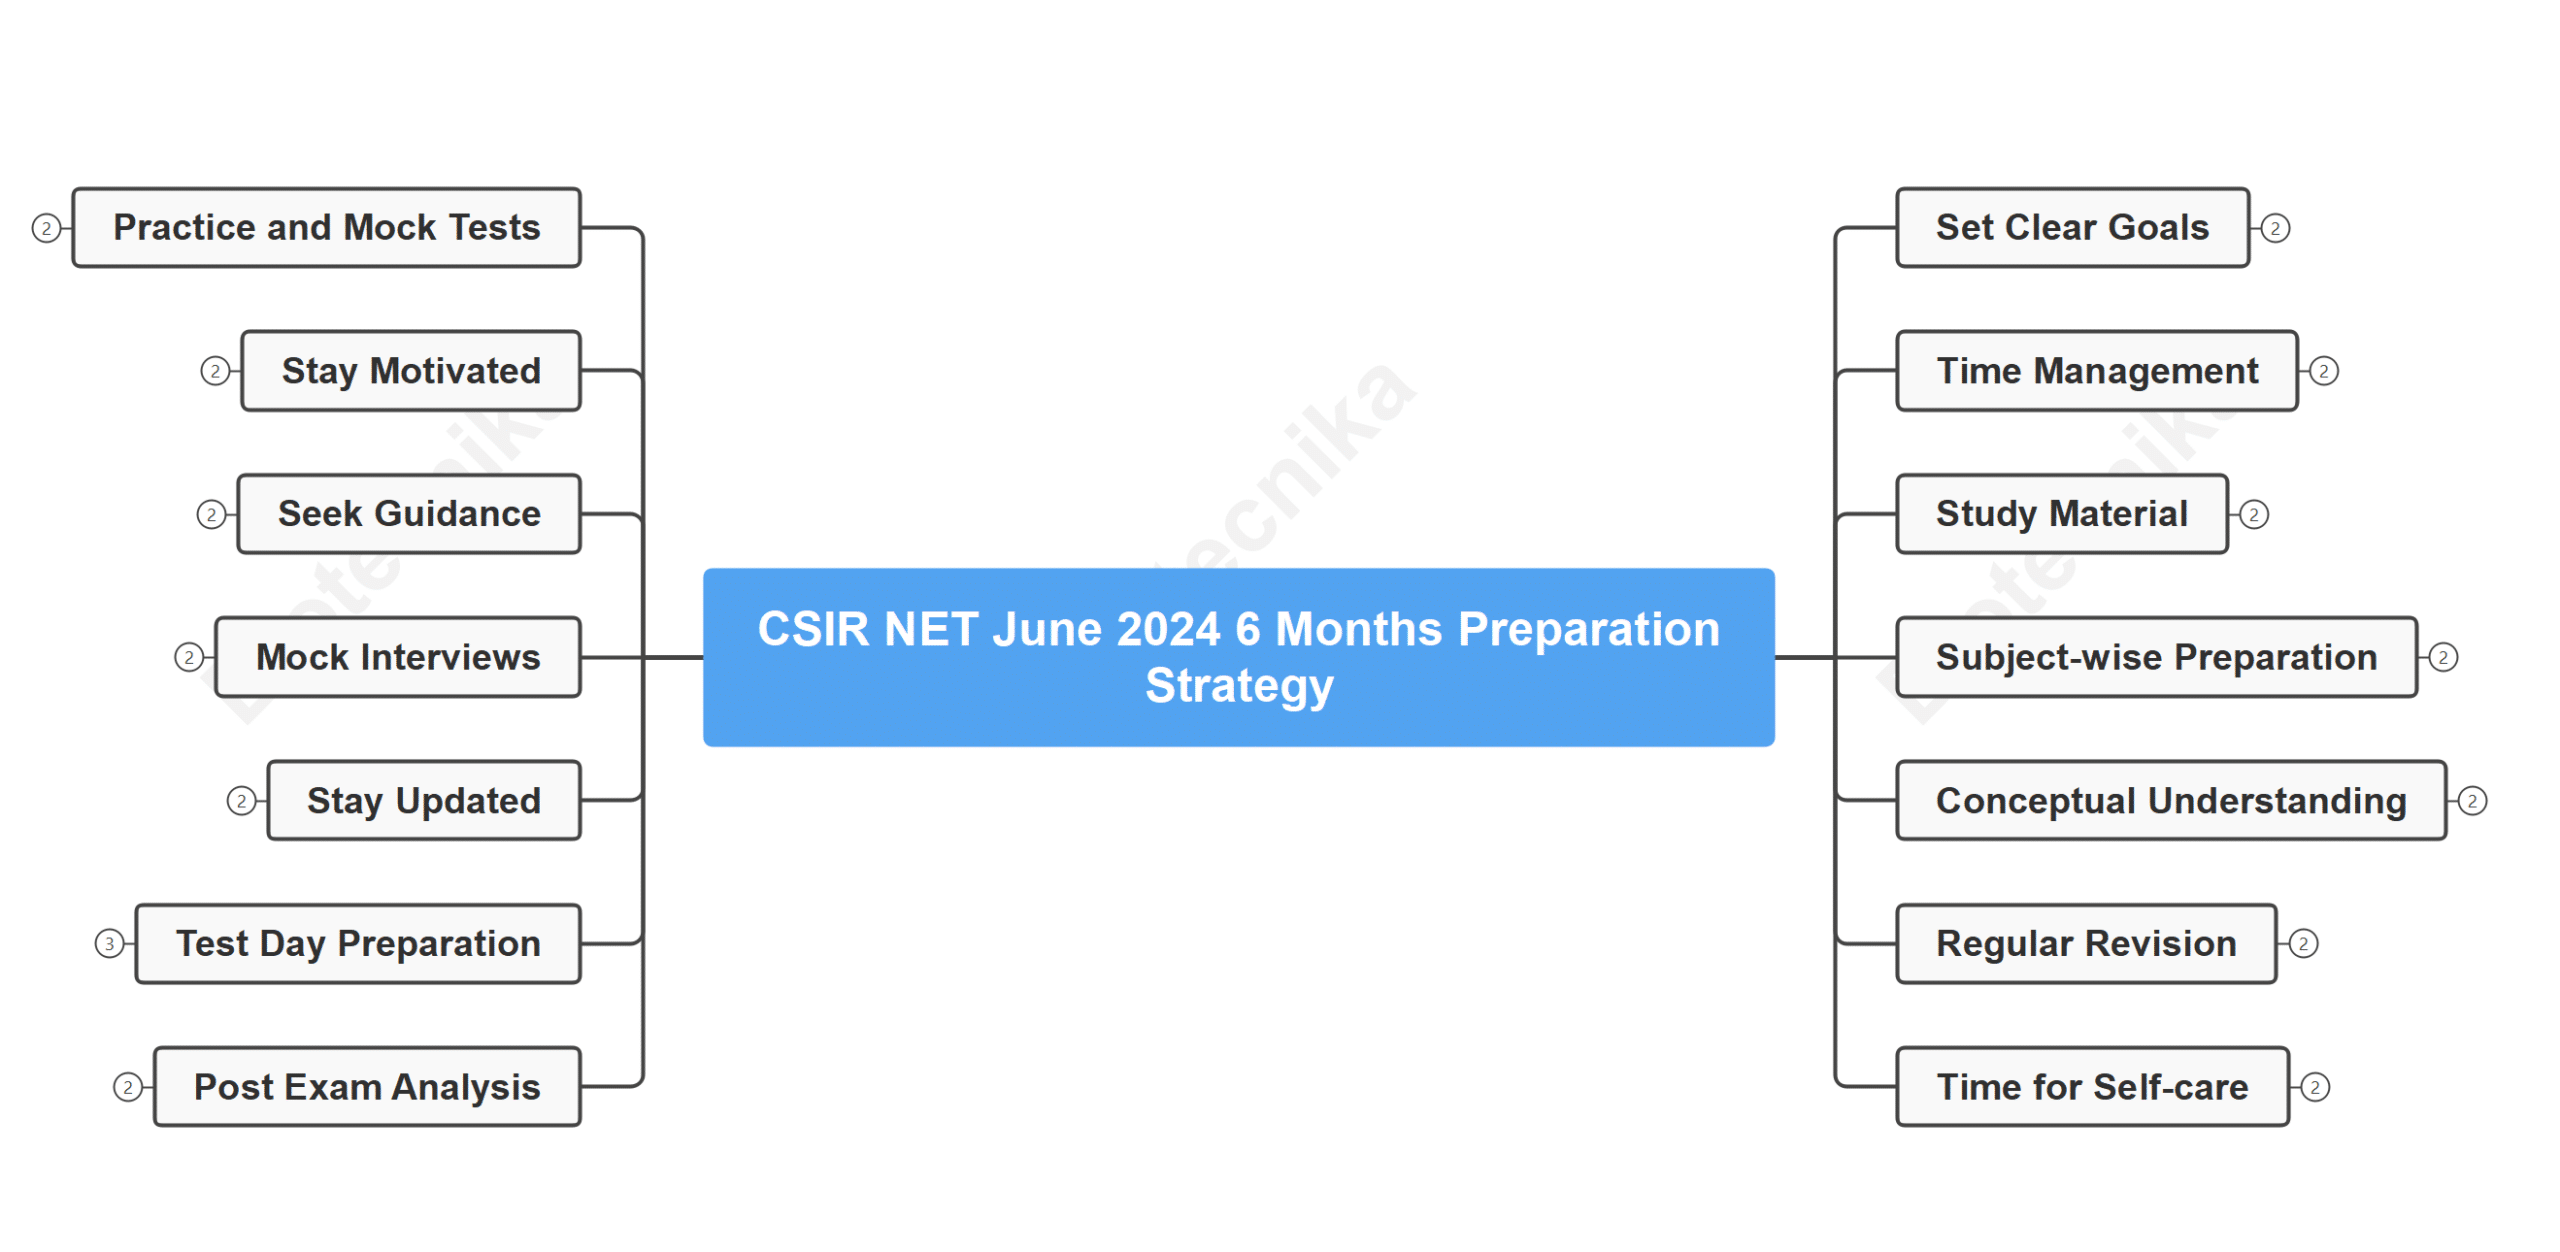 How to Prepare for csir net life science : CSIR NET June 2024 6 Months Preparation